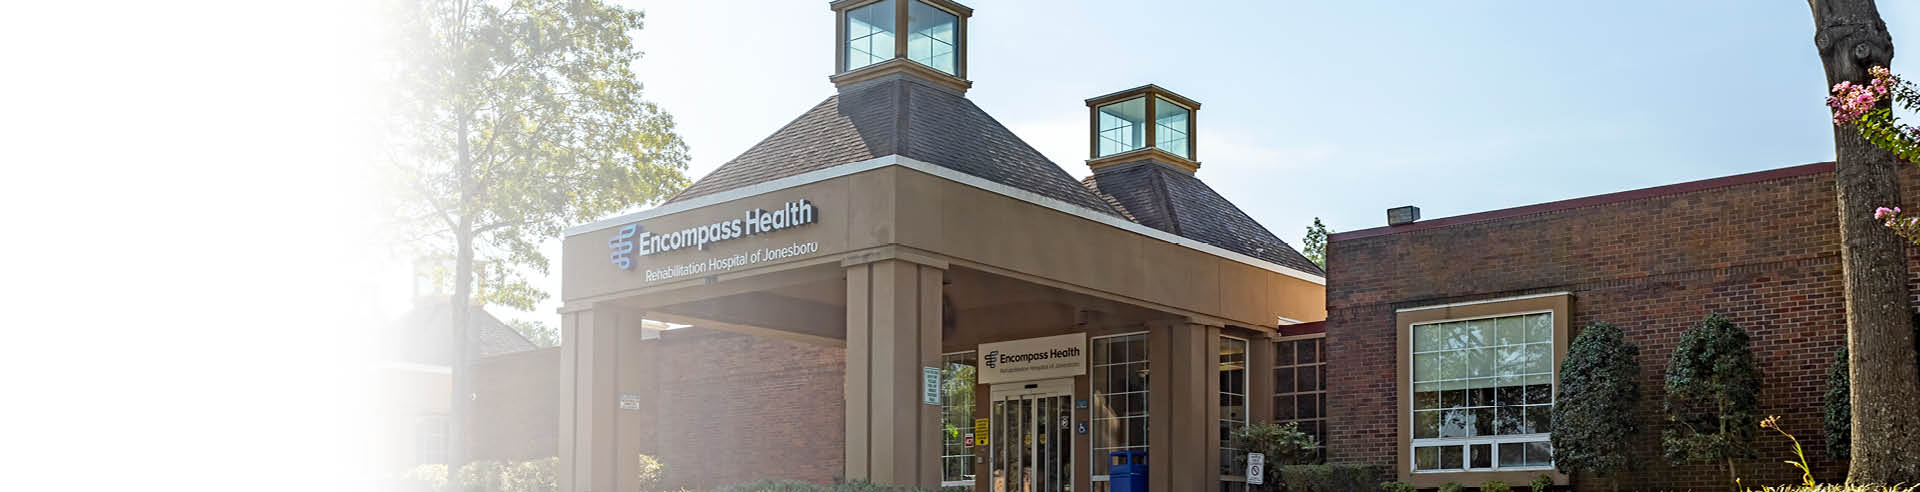 Encompass Health Rehabilitation Hospital of Jonesboro exterior